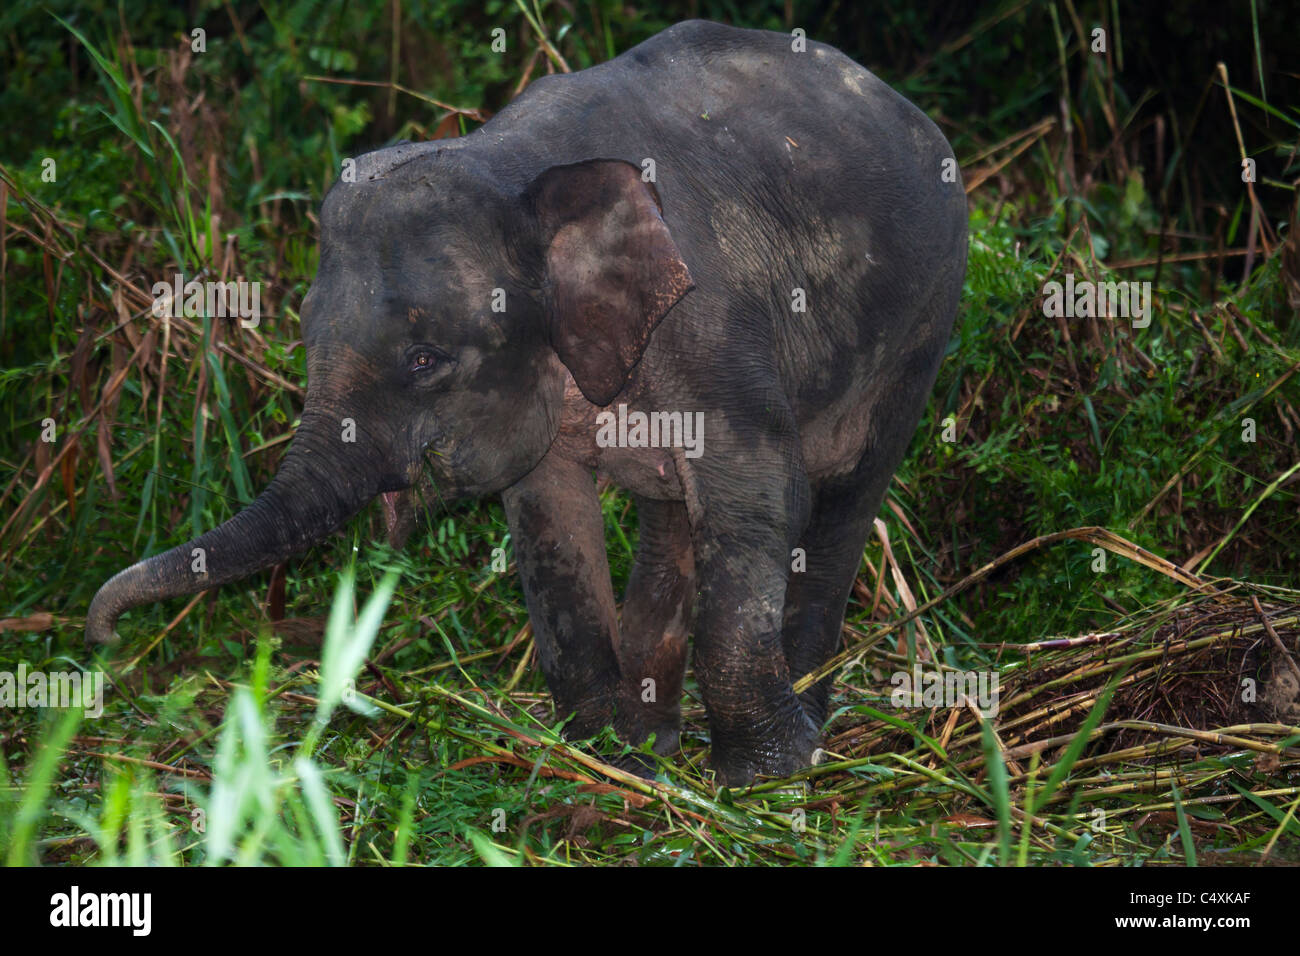 Wild Asian elefante pigmeo de Borneo elefantes pastando en pantanos fluviales Foto de stock